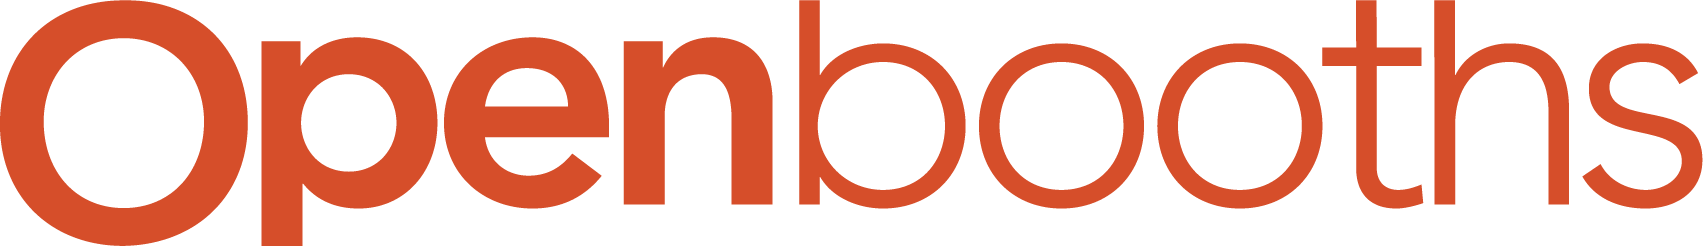 Openbooths Logo